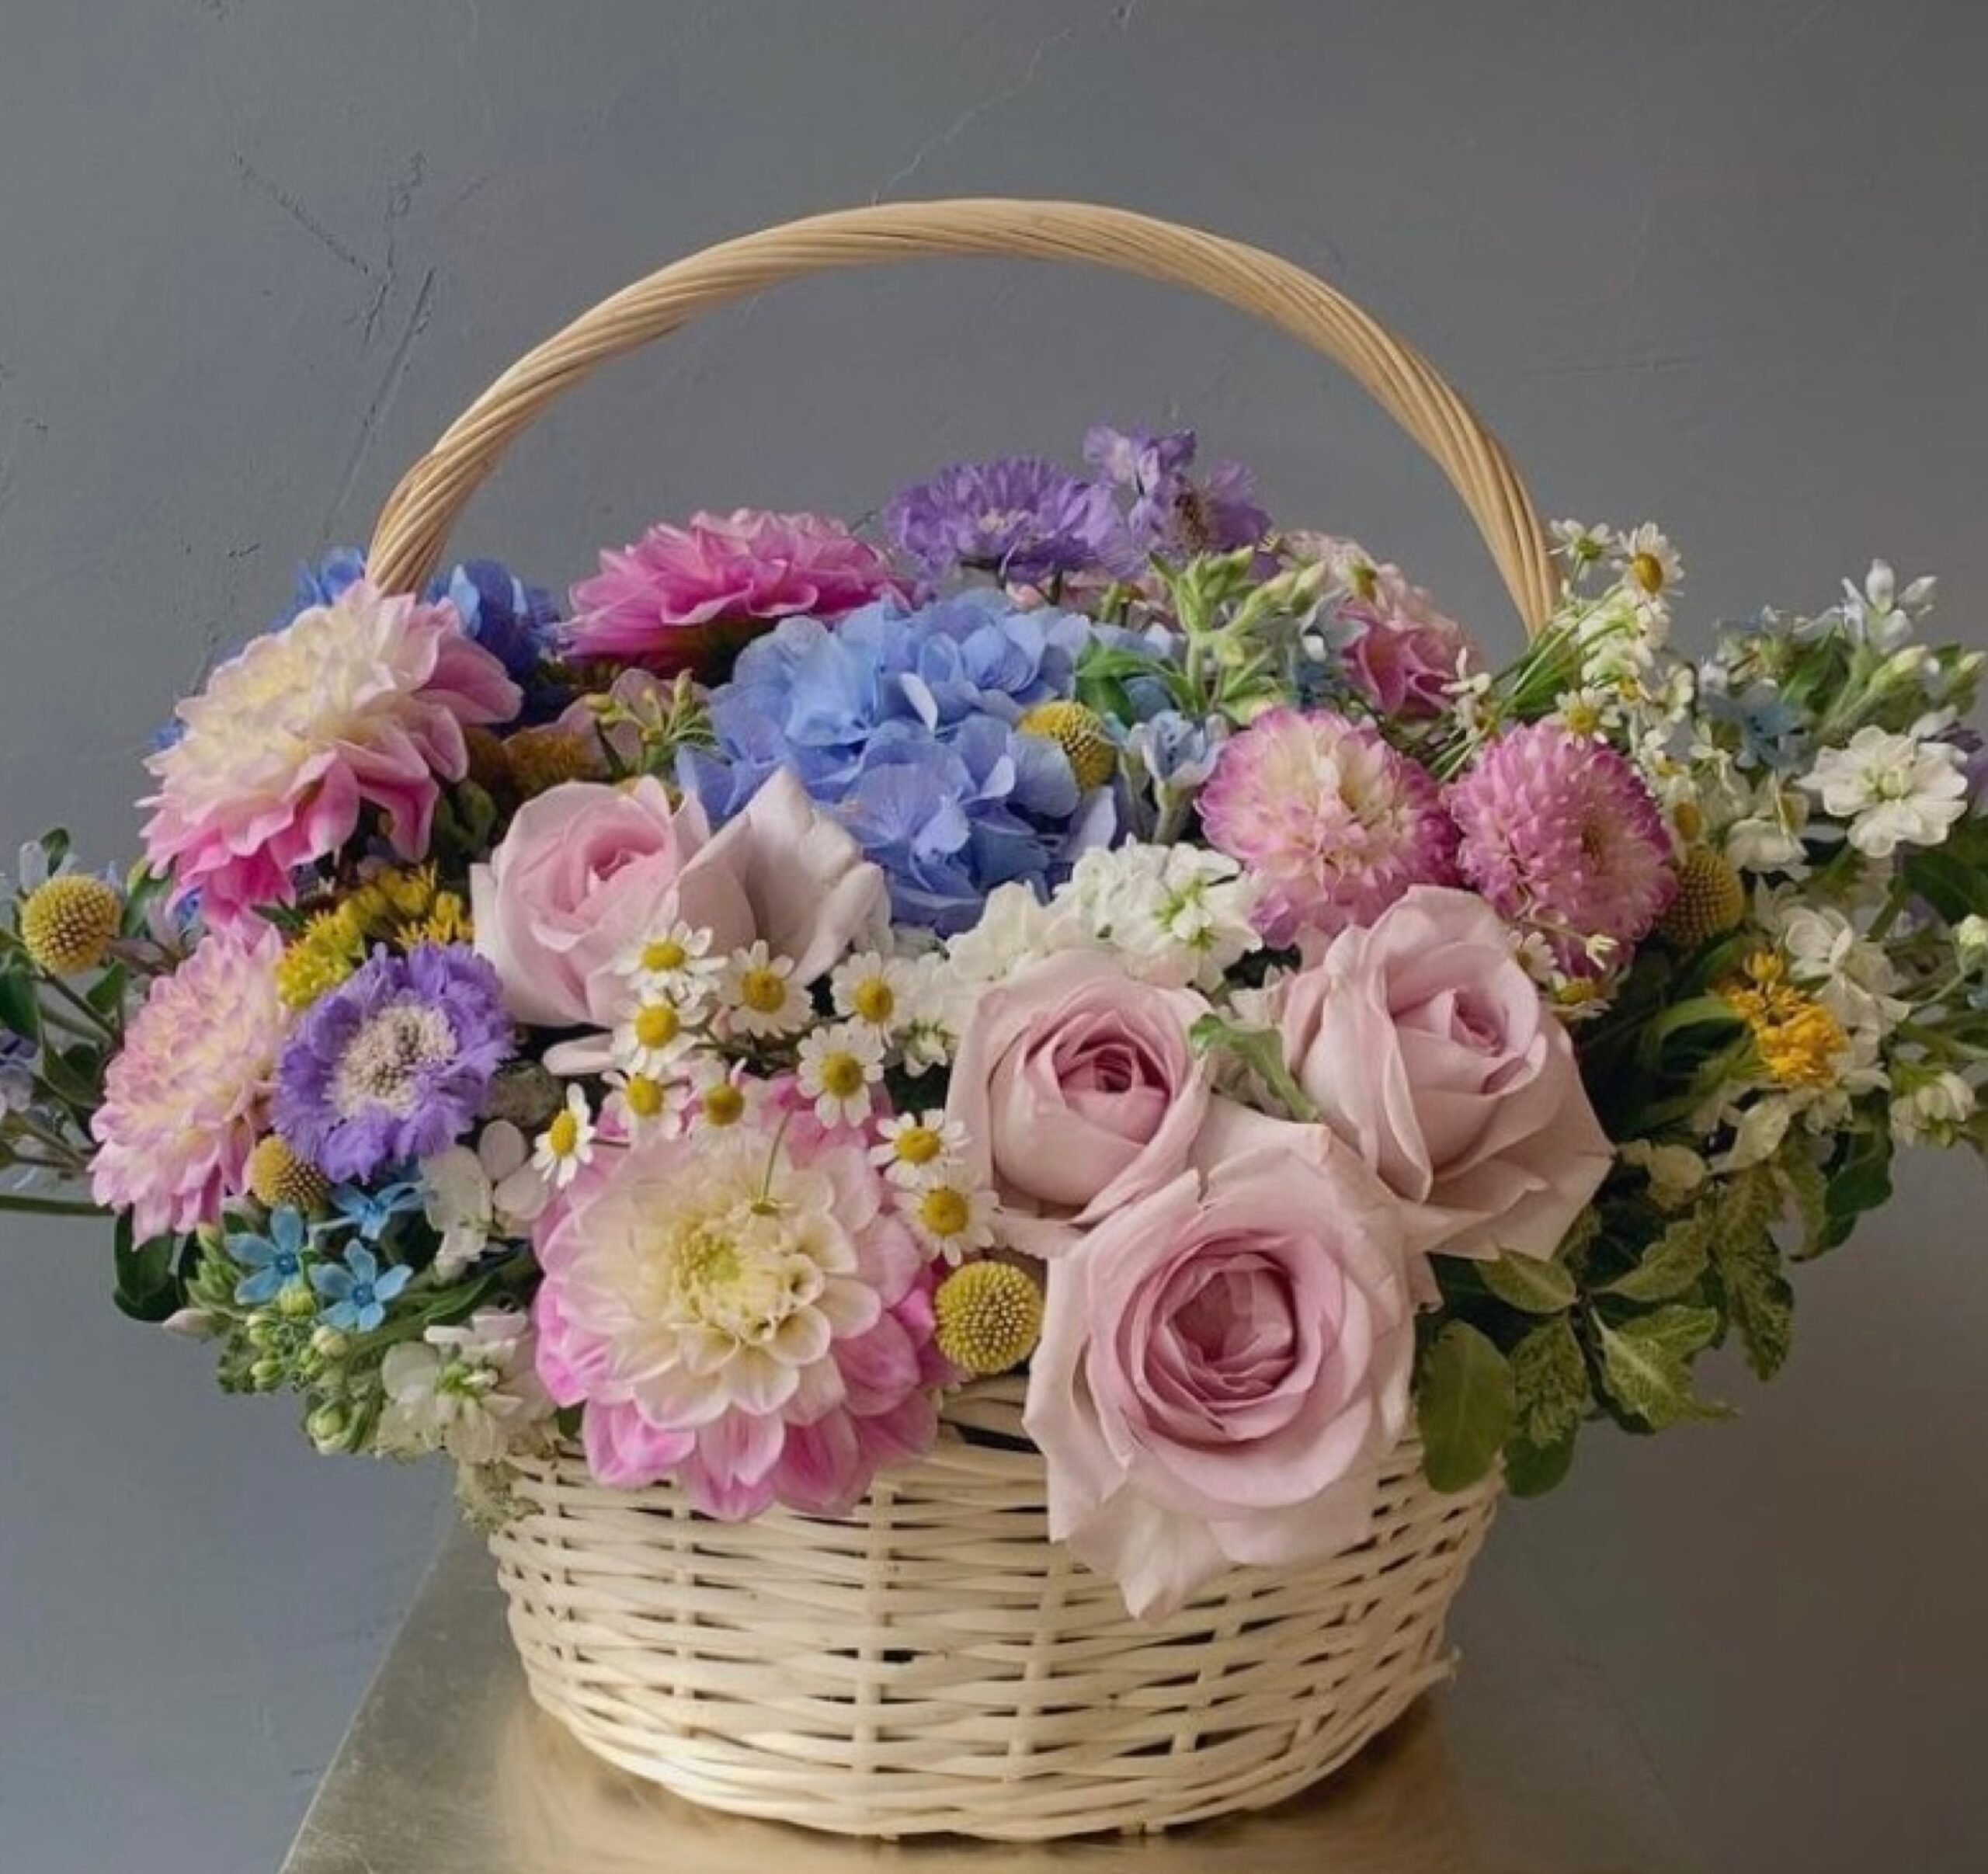 Flower Basket 'Our Dreams', Send Flowers Same Day Uk